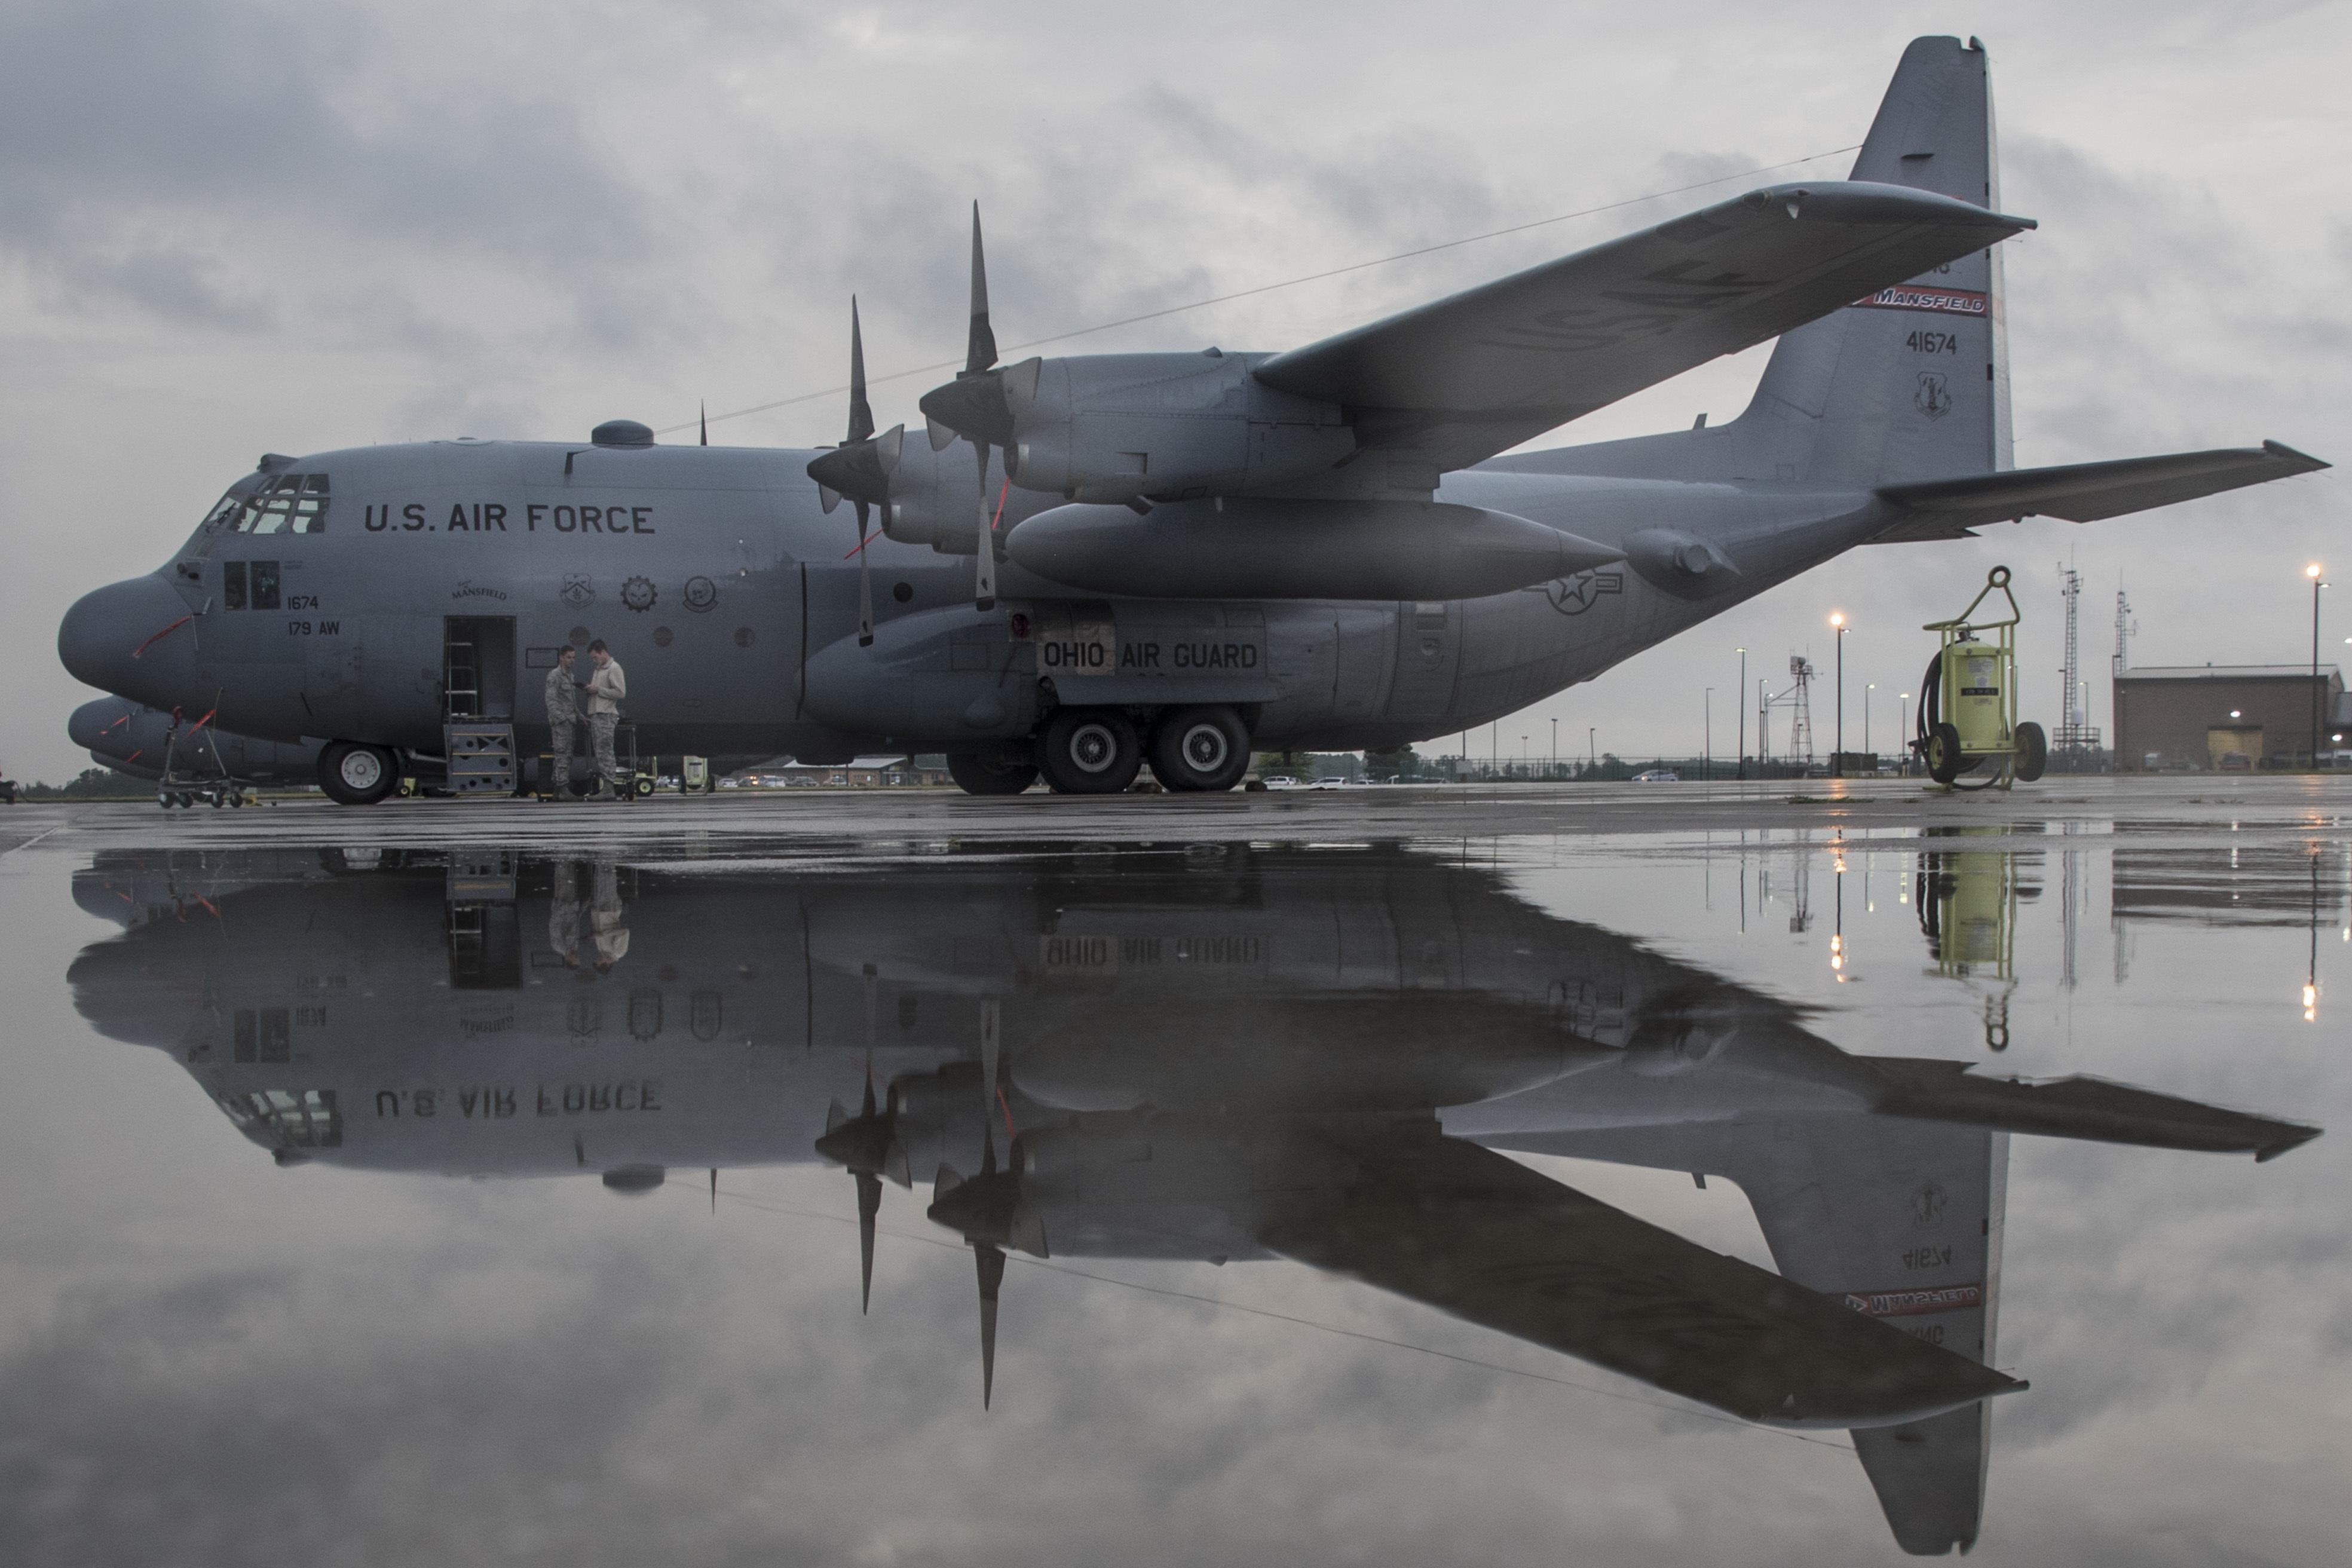 National Guard Leader Backs Limited C 130 Retirements Fleet Upgrade Aviation Week Network